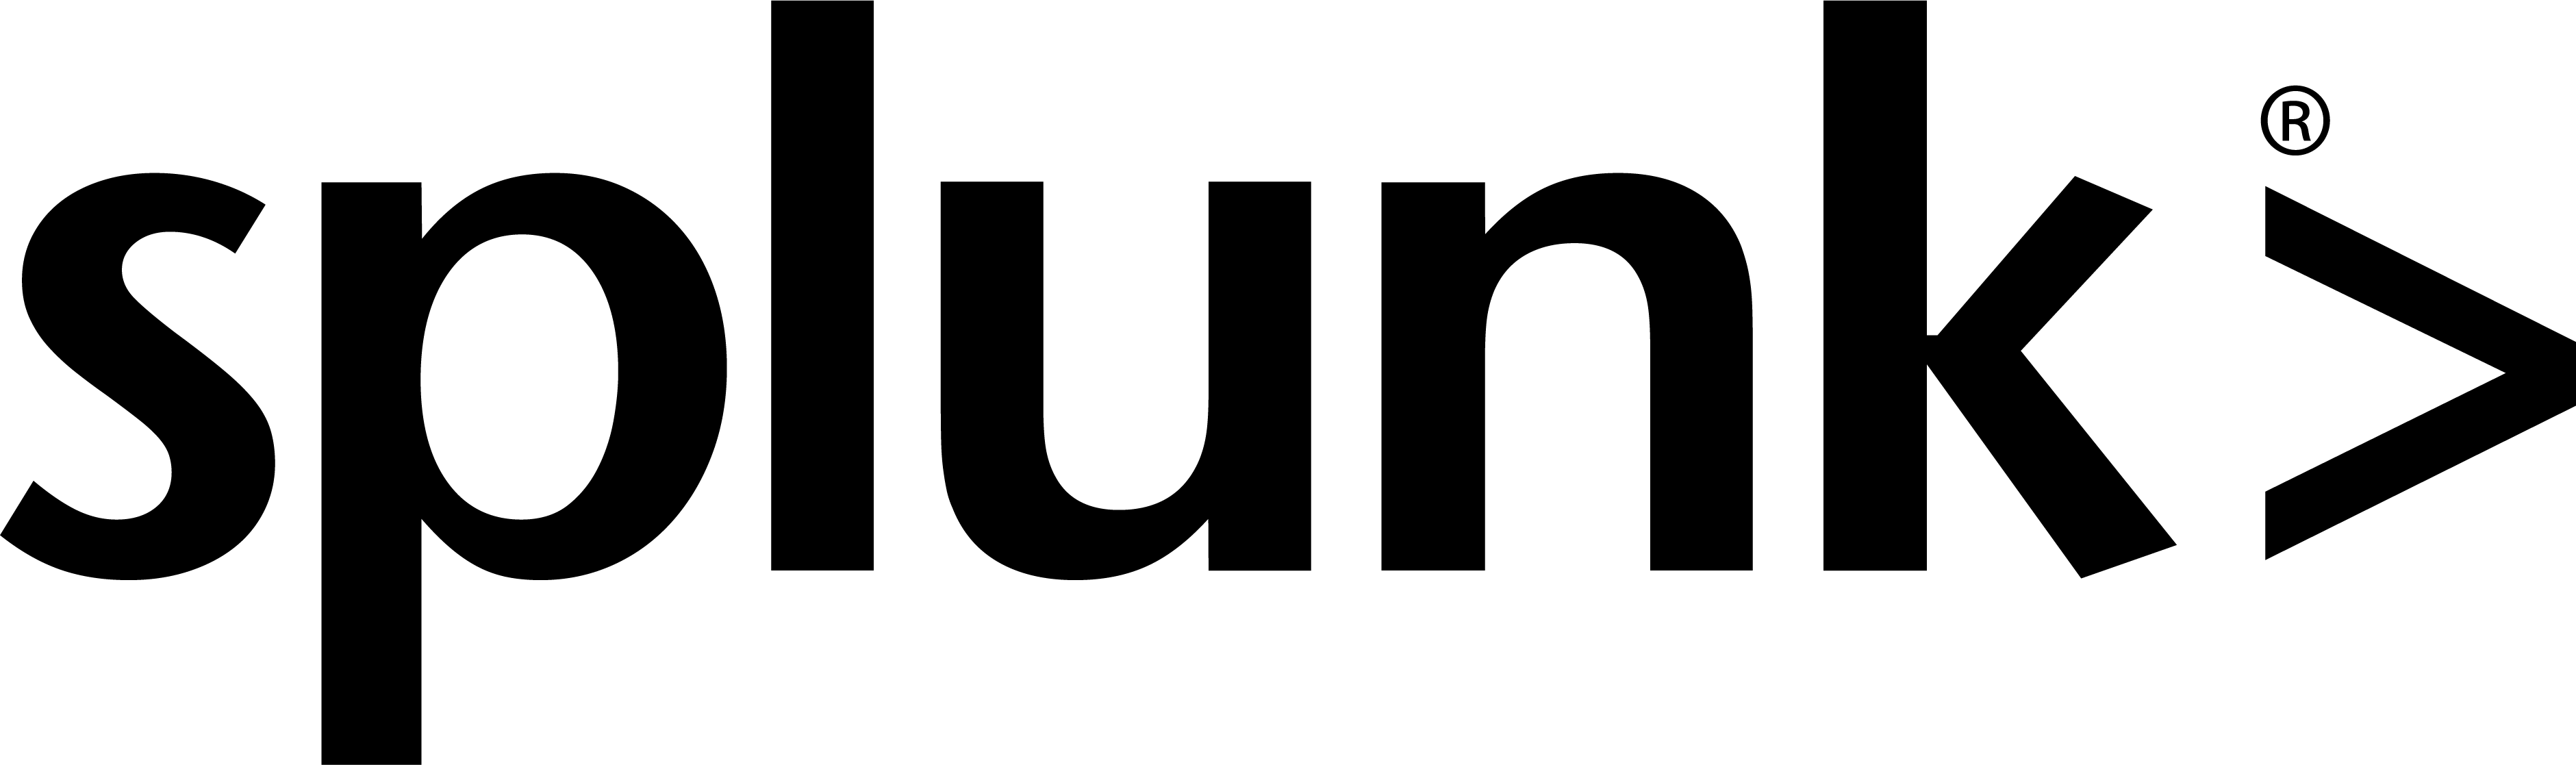 splunk logo white